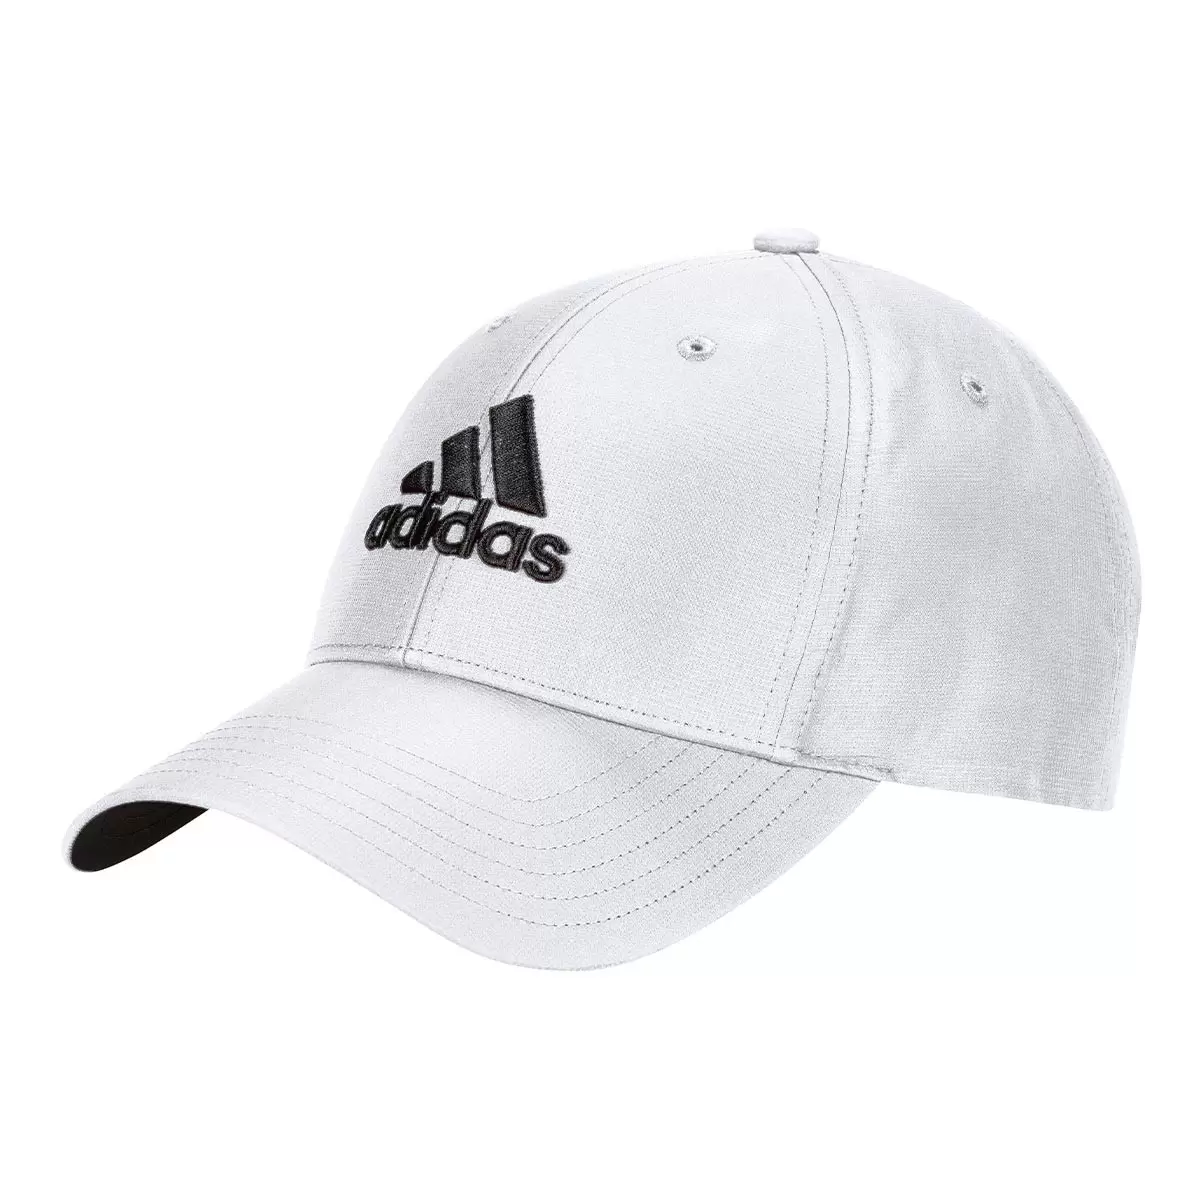 Adidas Golf 休閒帽